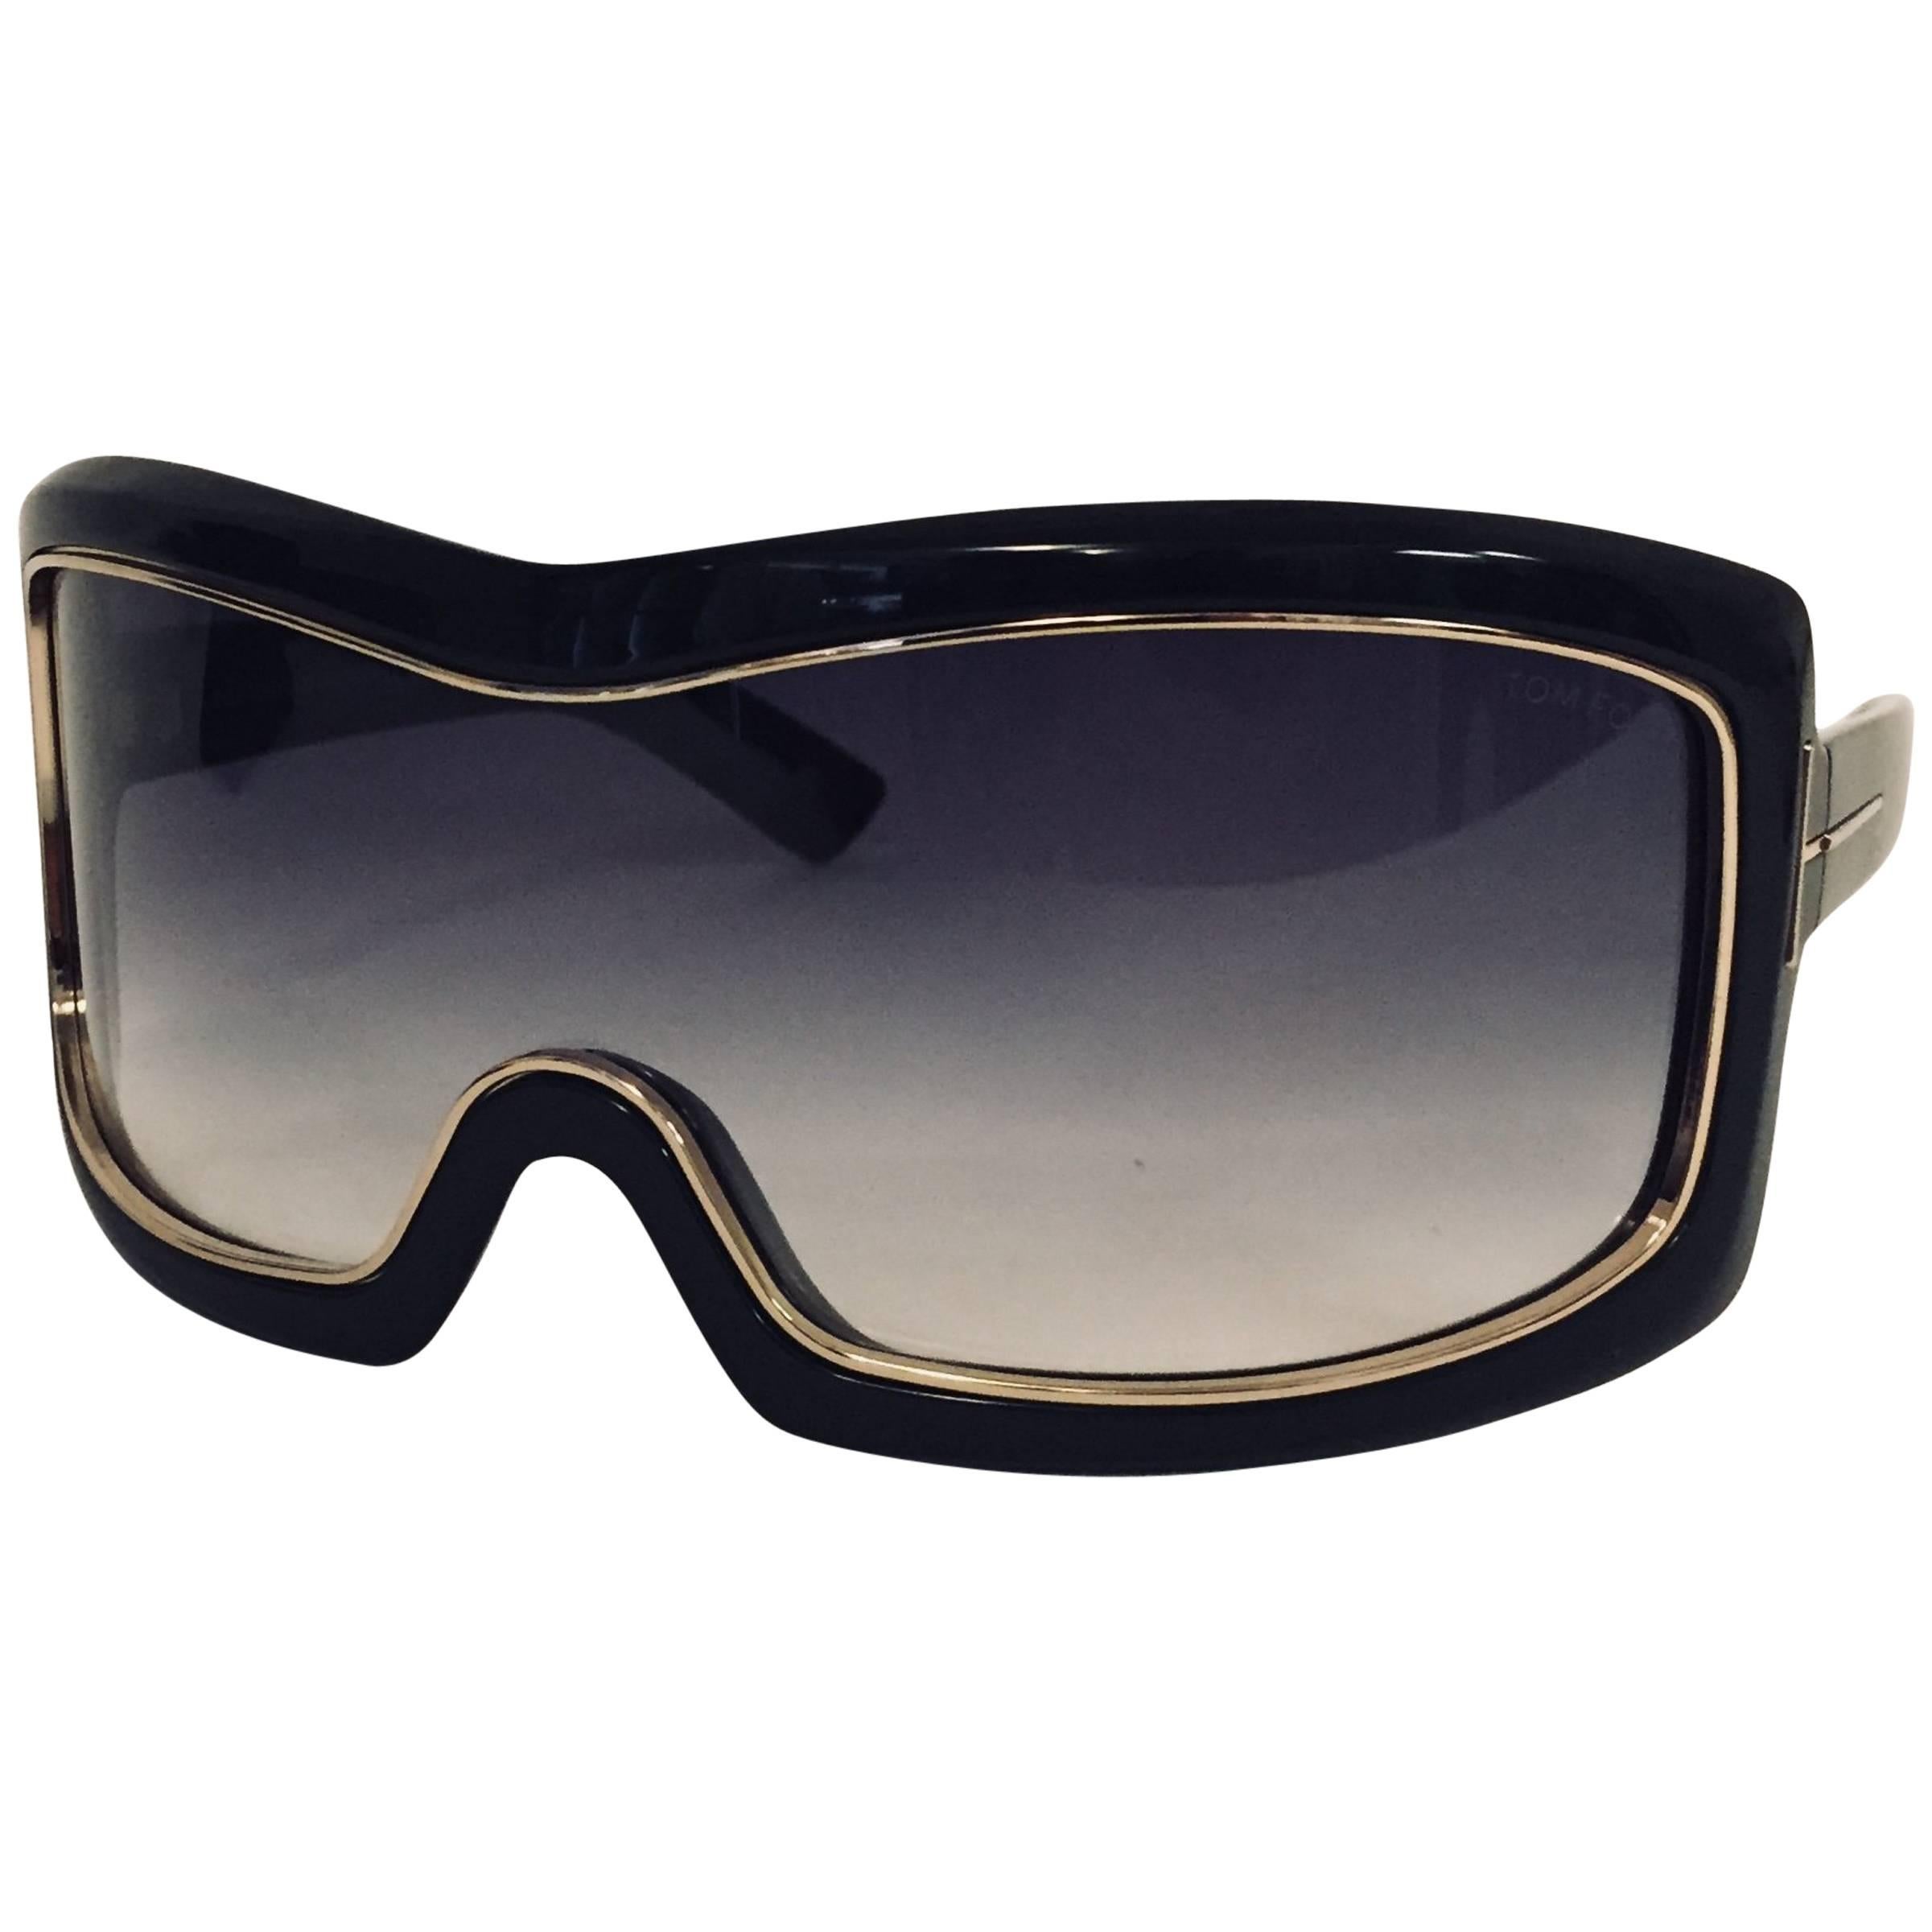 Unisex Tom Ford "Olga" Sensational Statement Shield Sunglasses w Gradient Lenses